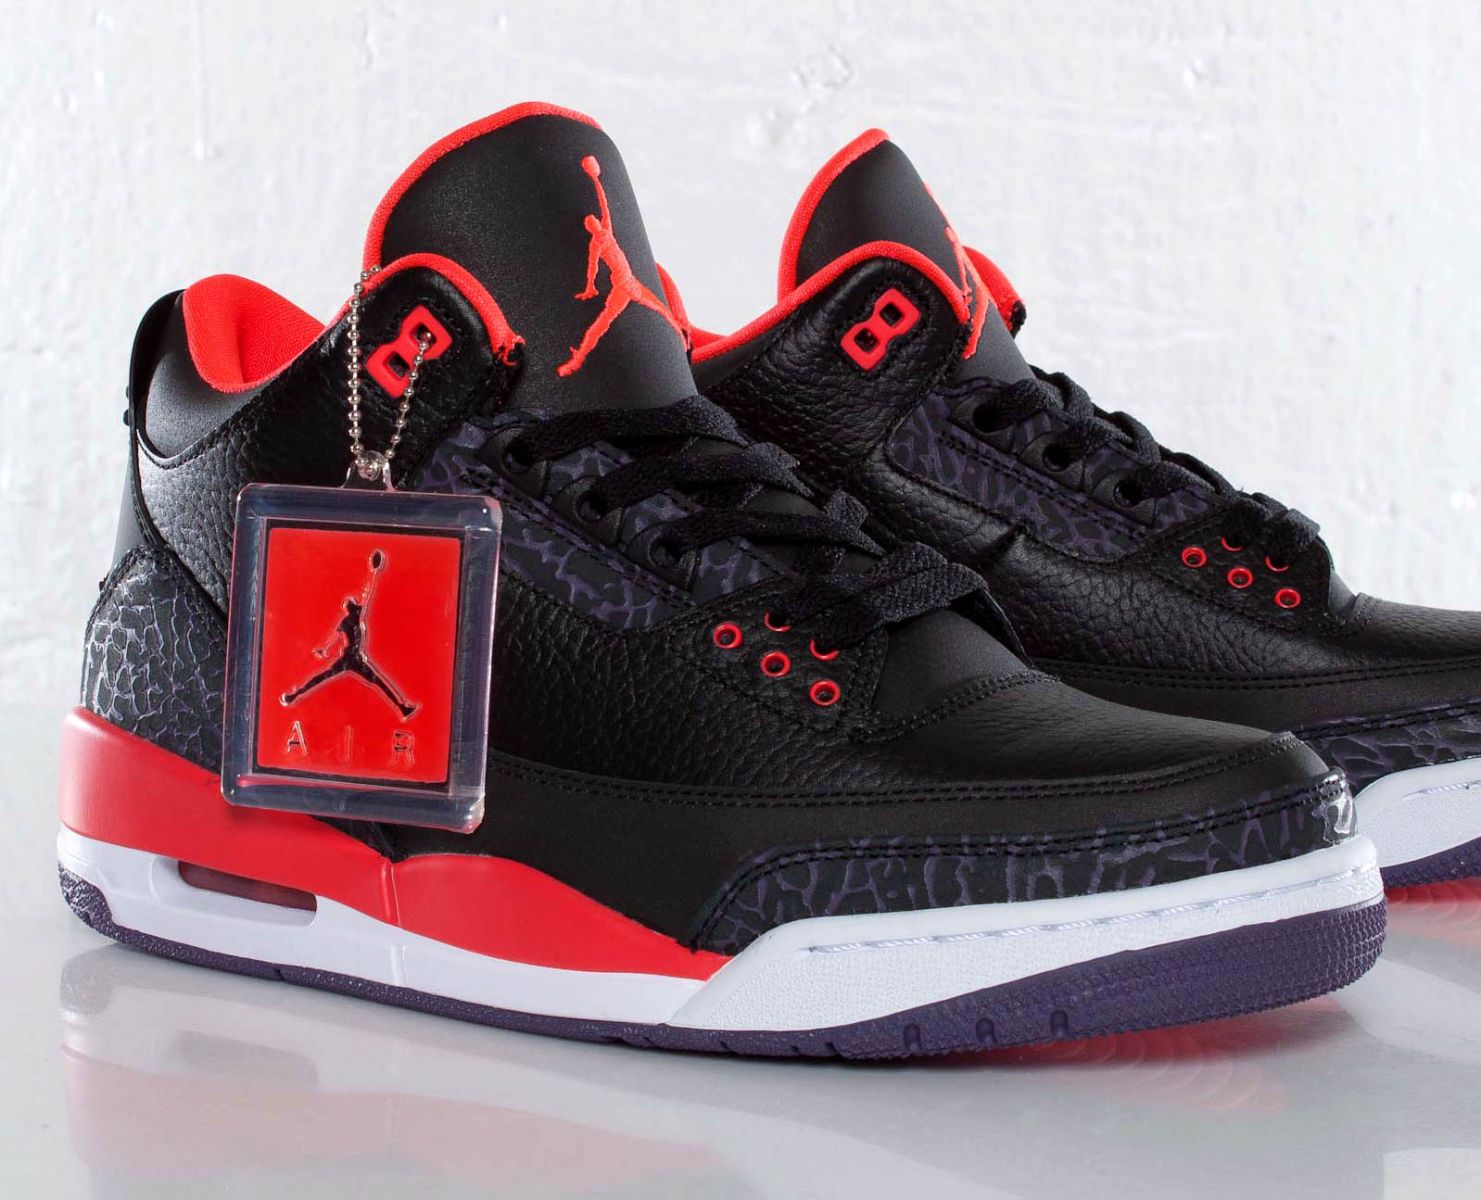 Air Jordan 3 Retro "Bright Crimson" New Images and Release Reminder